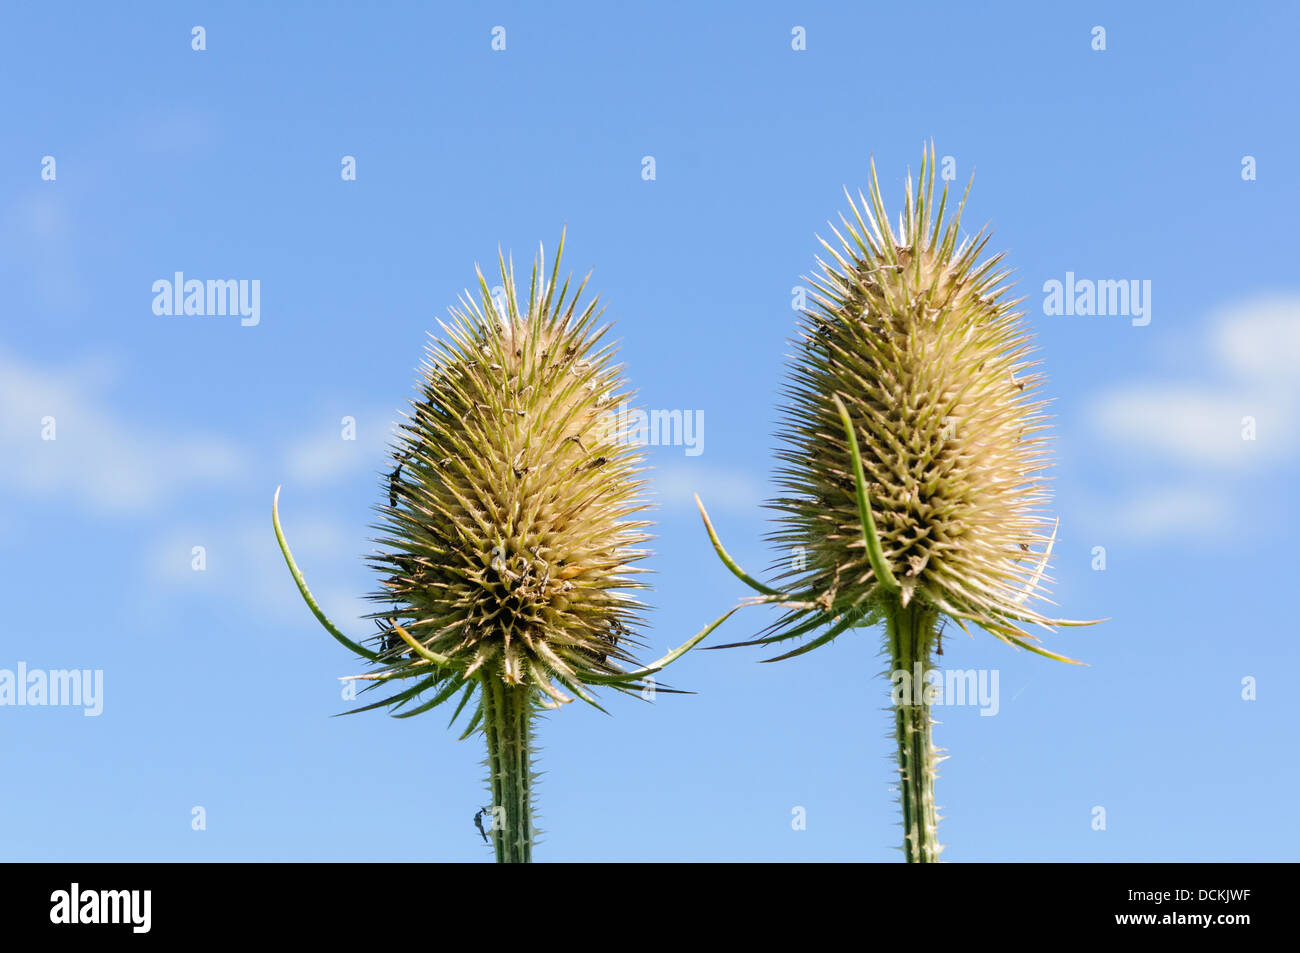 Seedheads of teasel (Dipsacus fullonum) plants Stock Photo